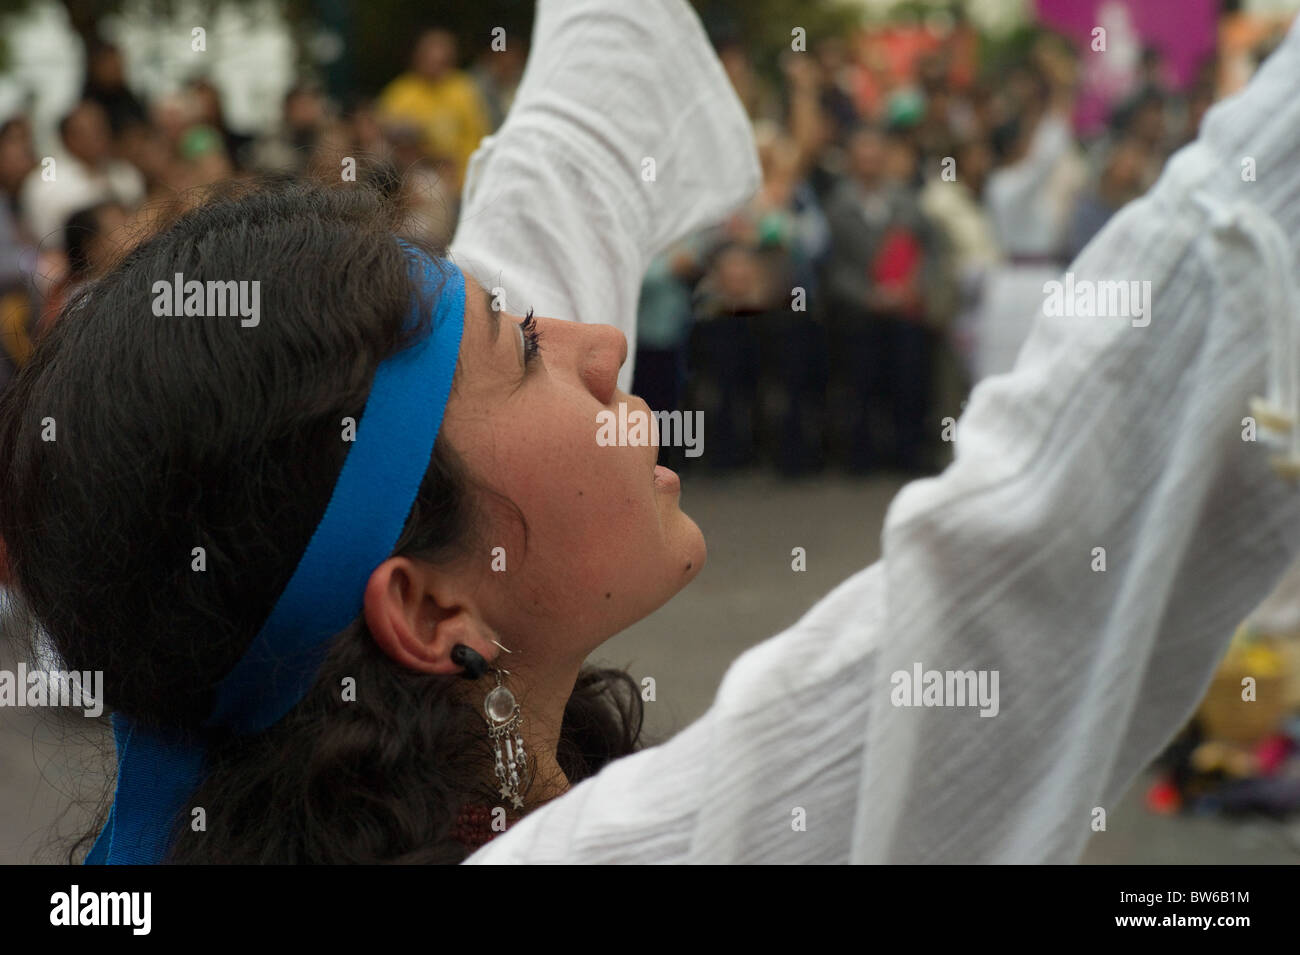 Indigenous people dancing in Plaza Grande, Quito, Ecuador Stock Photo